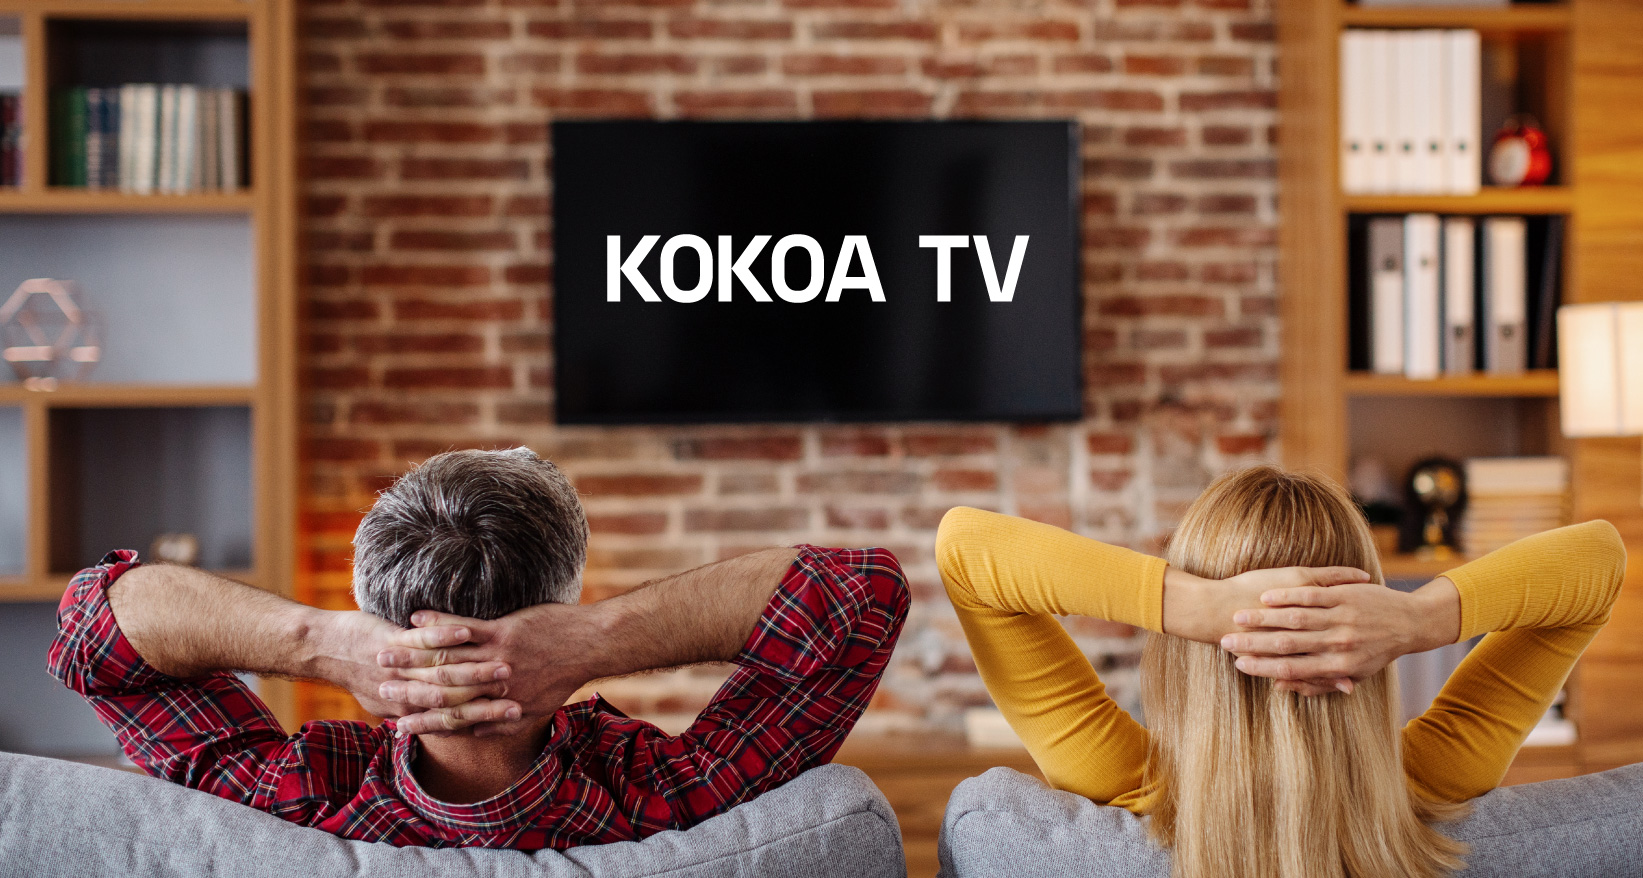 Kokoa TV: The New Wave in Streaming Entertainment